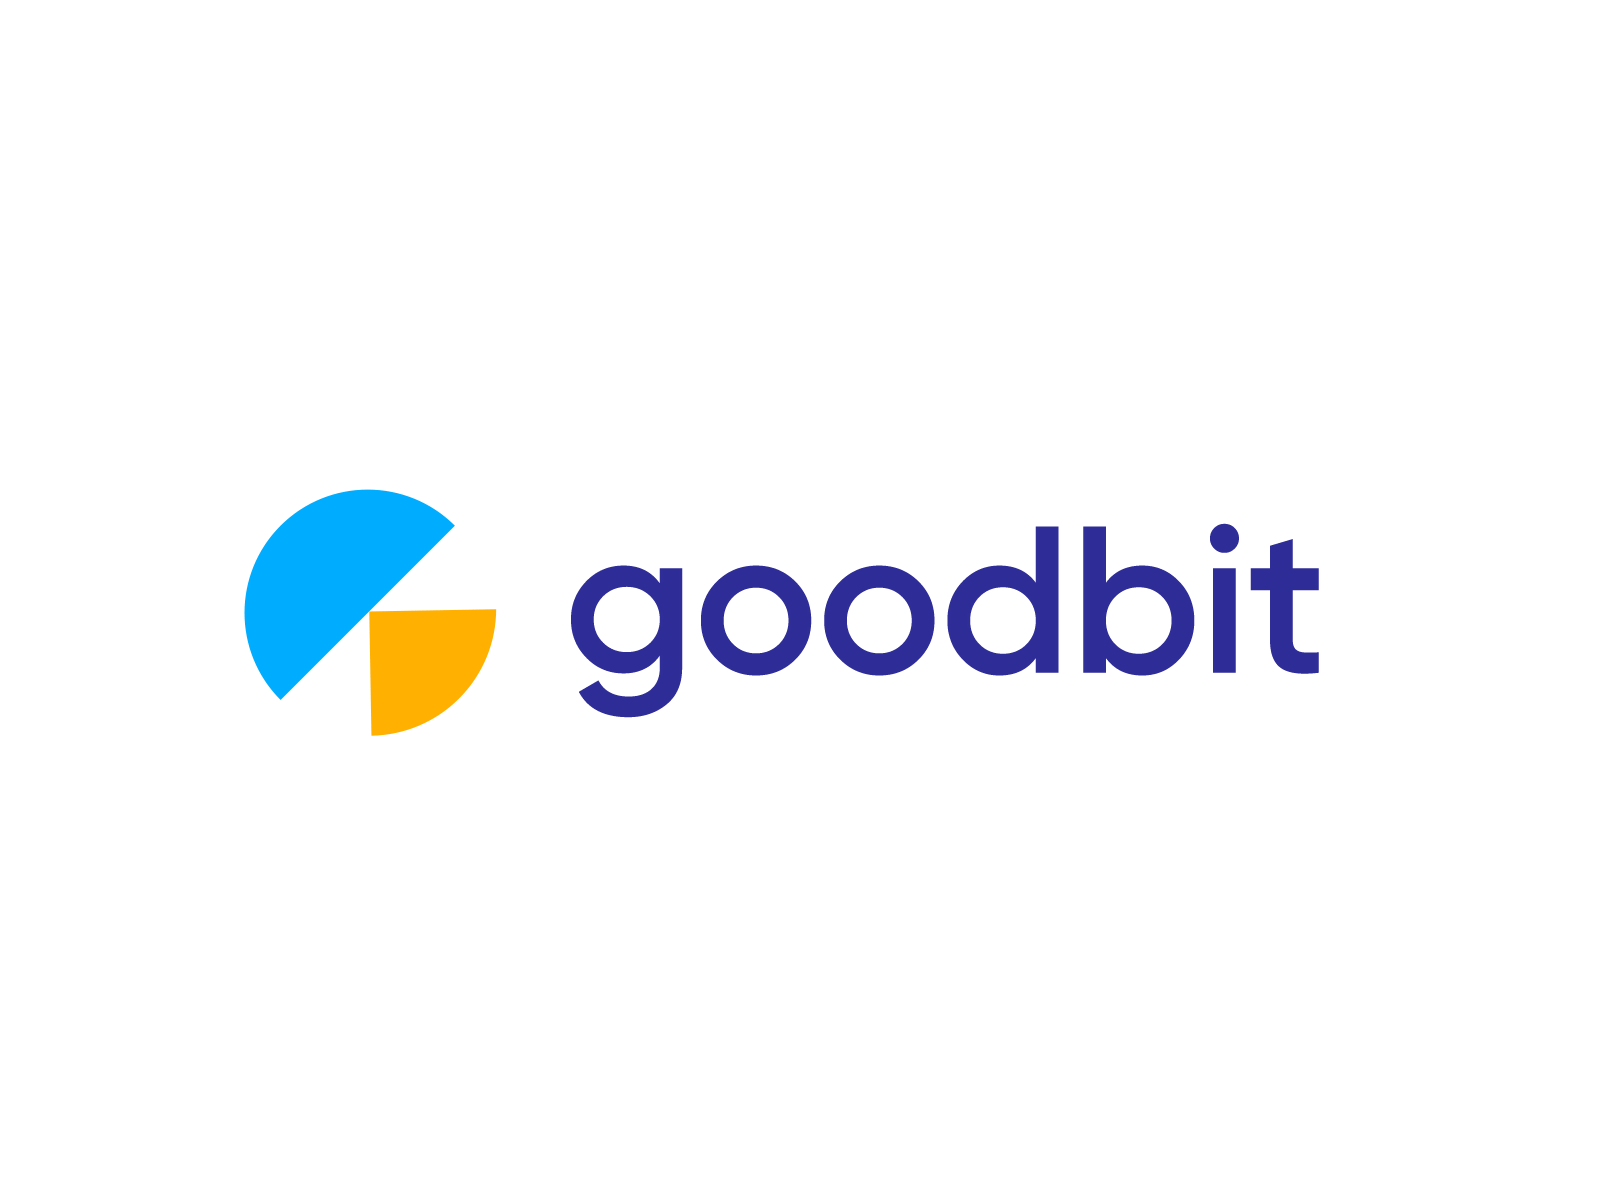 Goodbit Logo Animation